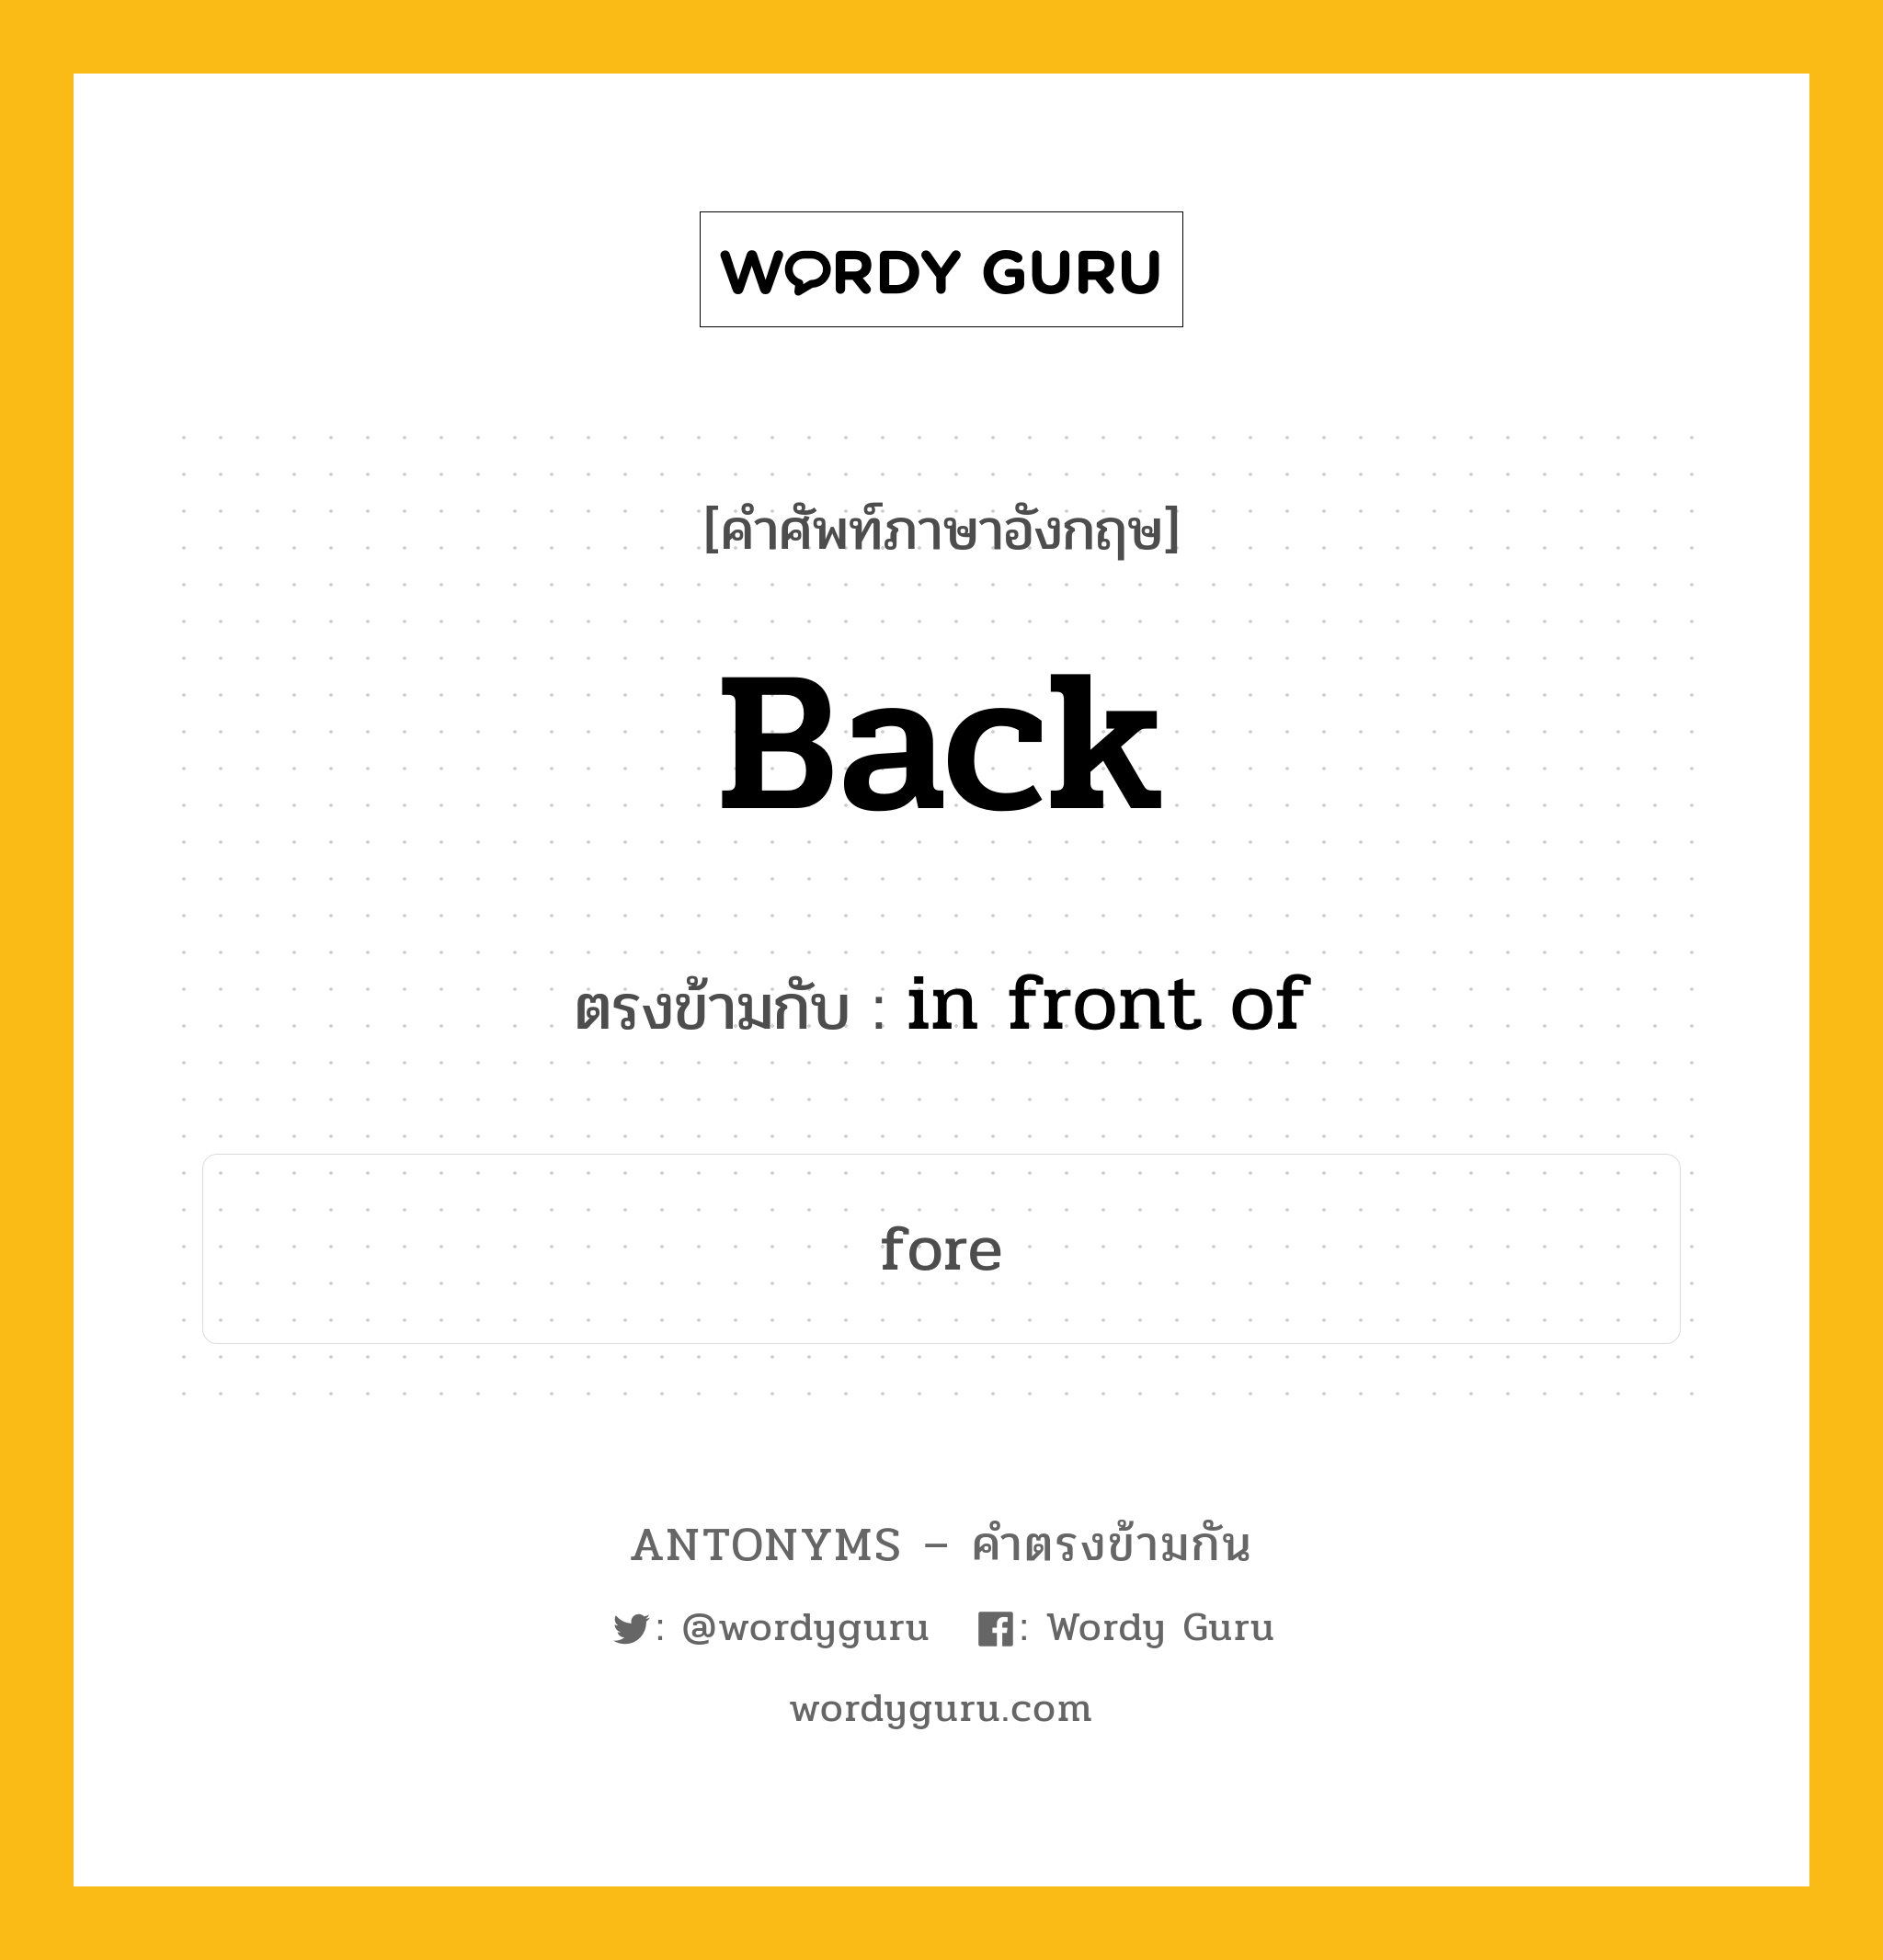 back เป็นคำตรงข้ามกับคำไหนบ้าง?, คำศัพท์ภาษาอังกฤษ back ตรงข้ามกับ in front of หมวด in front of